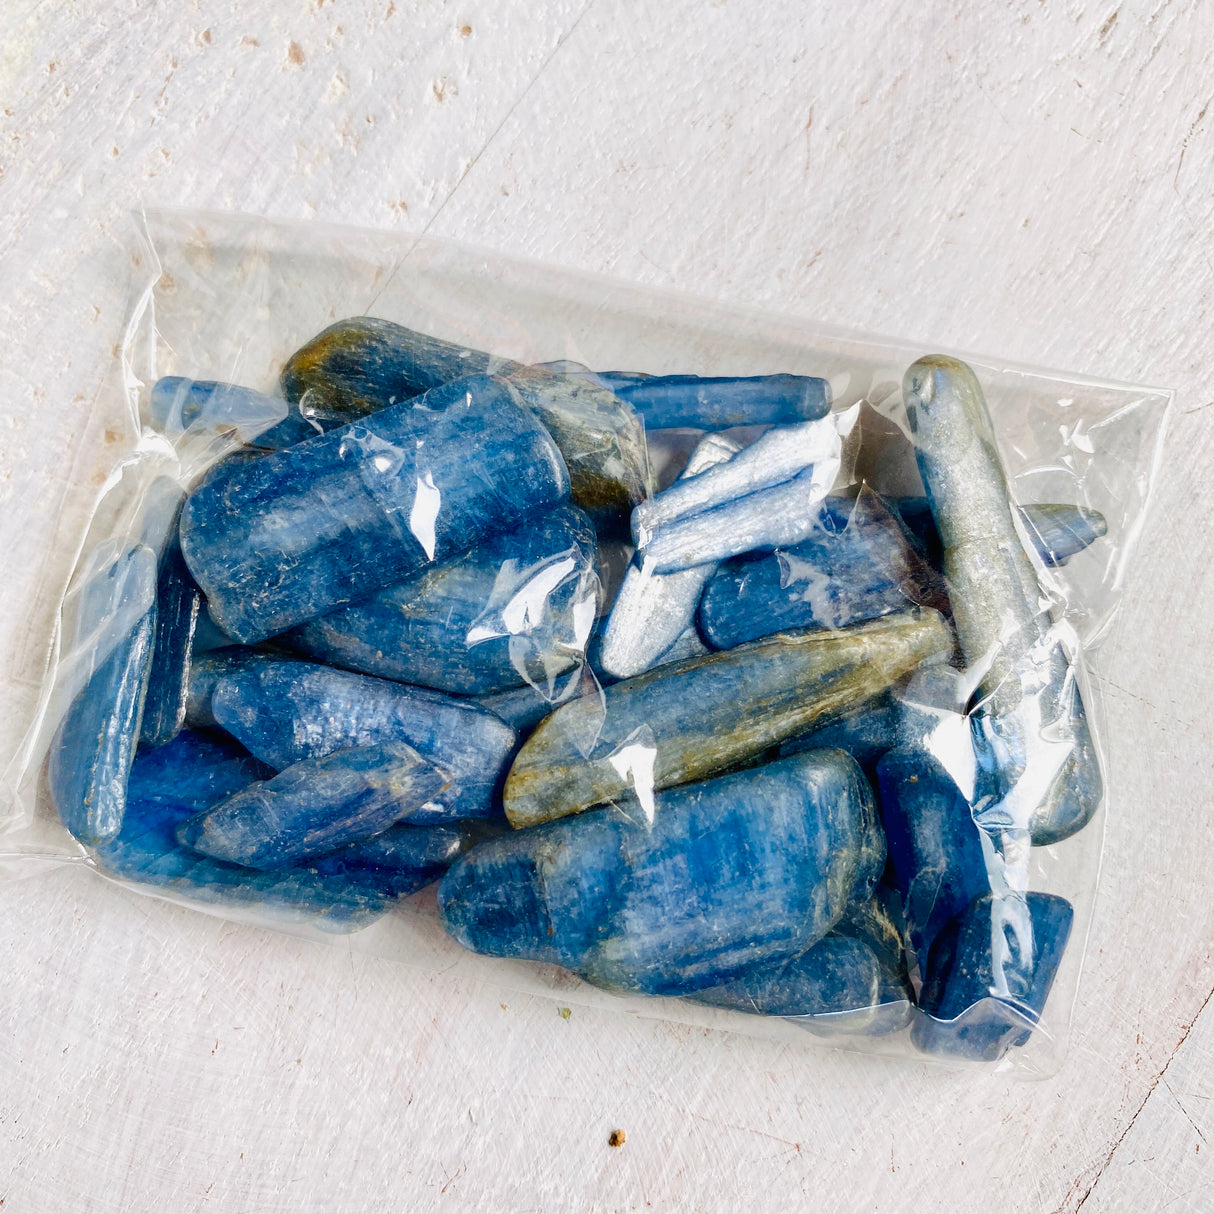 Mini tumbled stones (Chips) 50g - Blue Kyanite